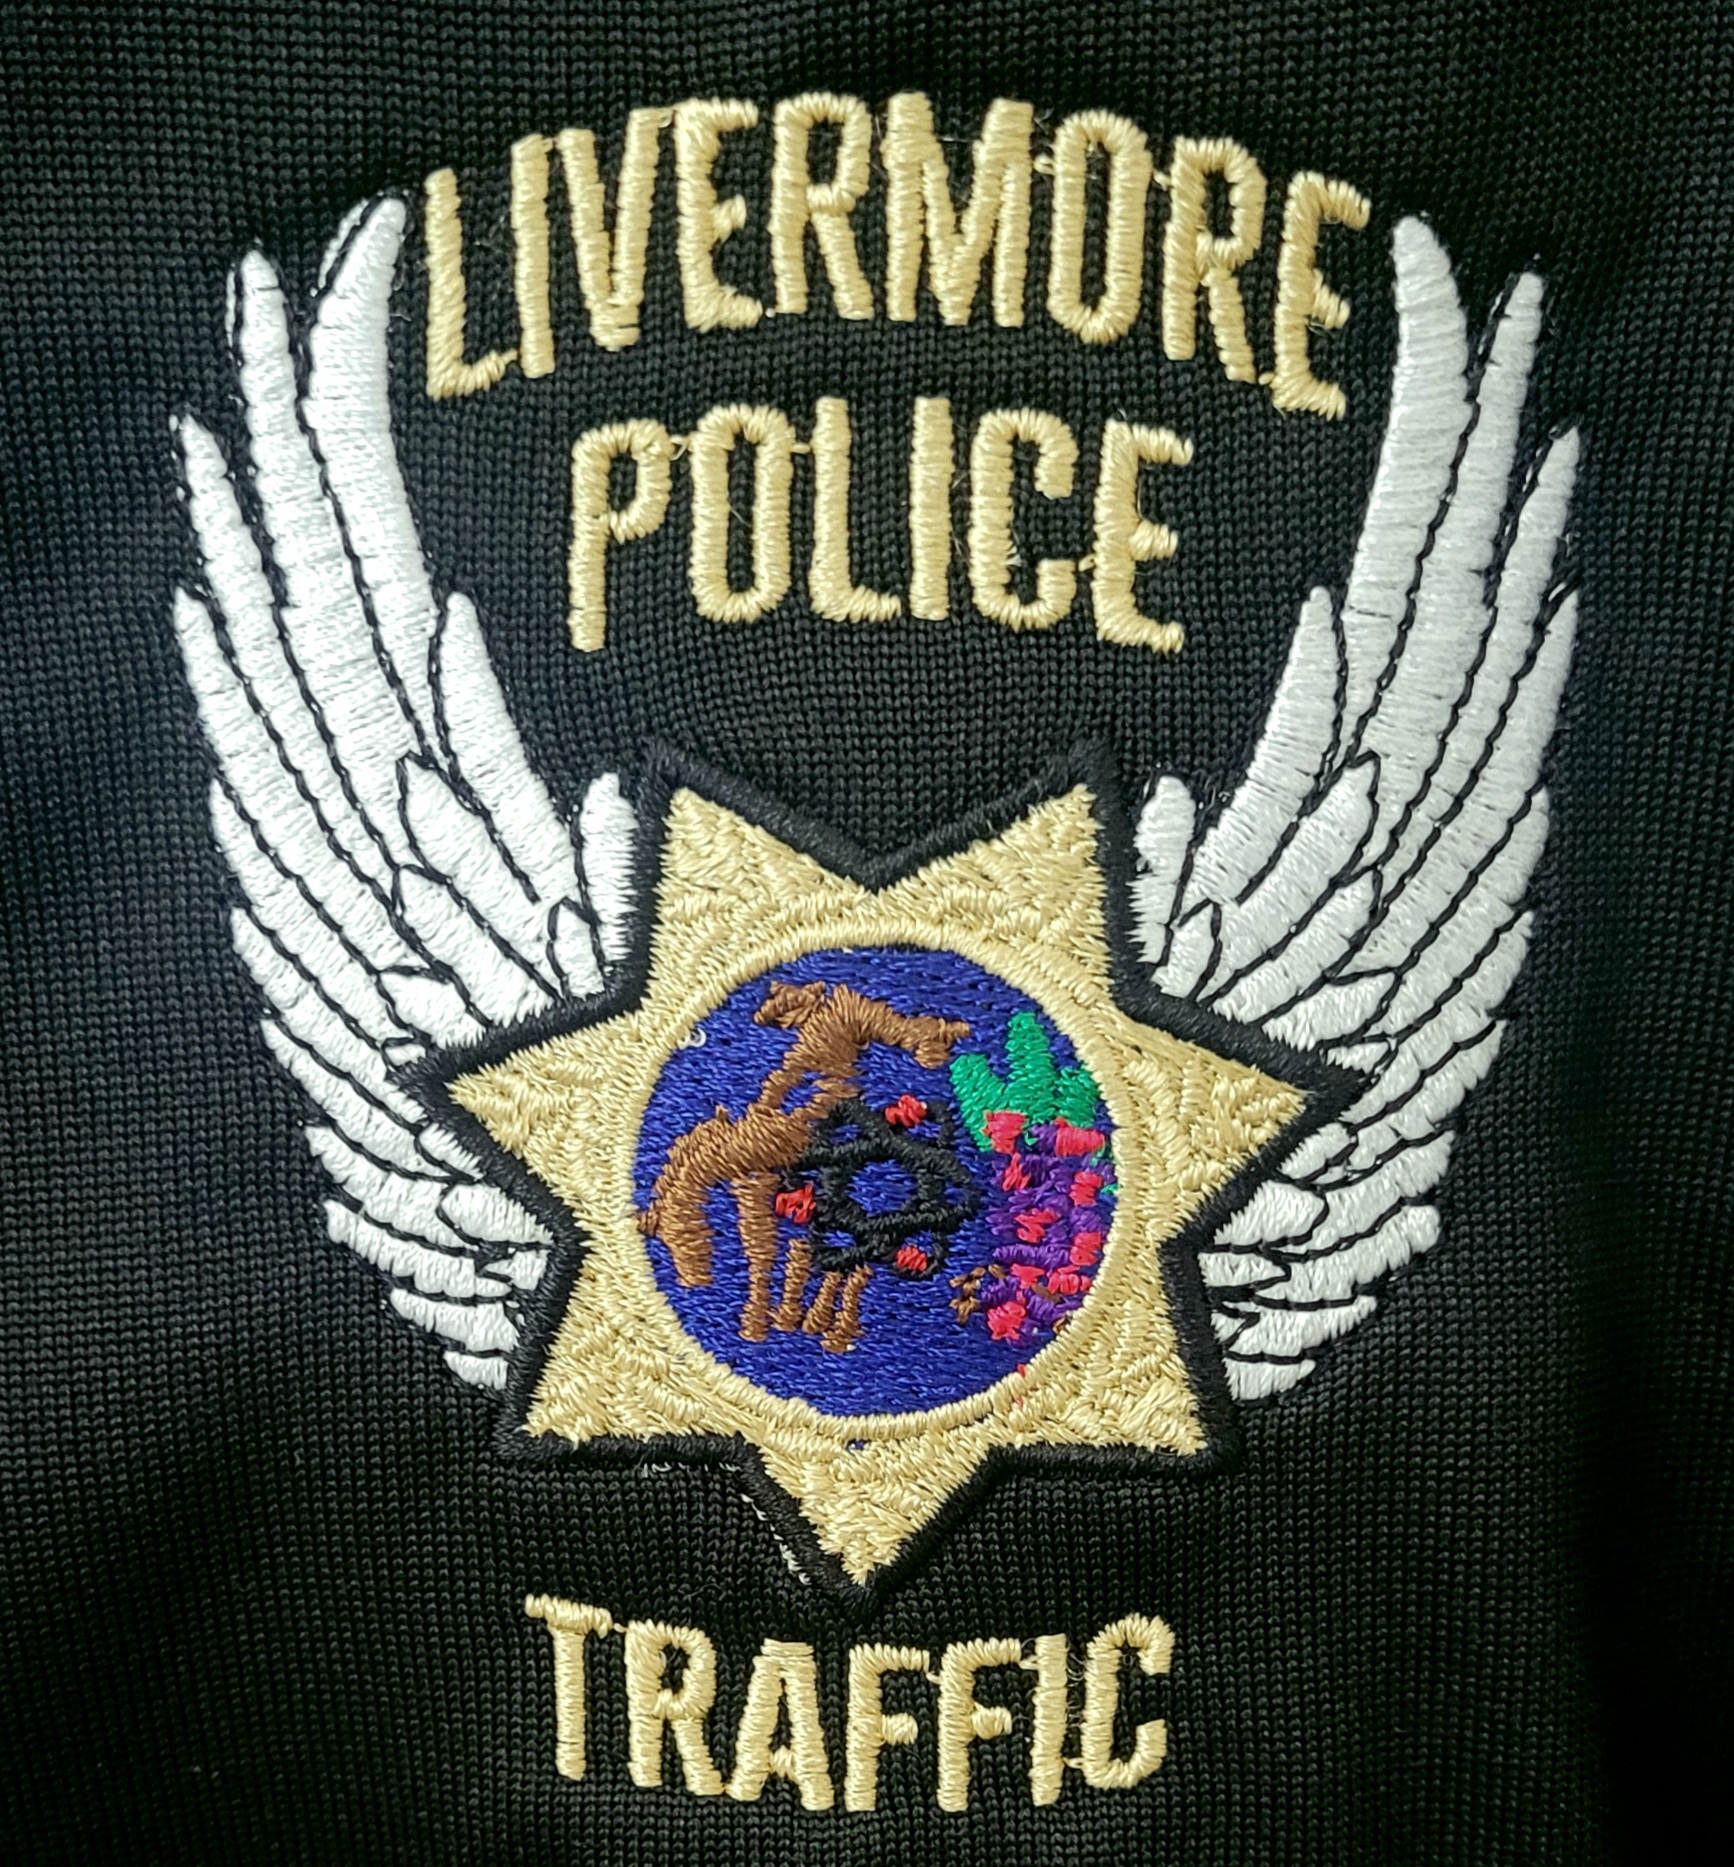 LPD Traffic emblem